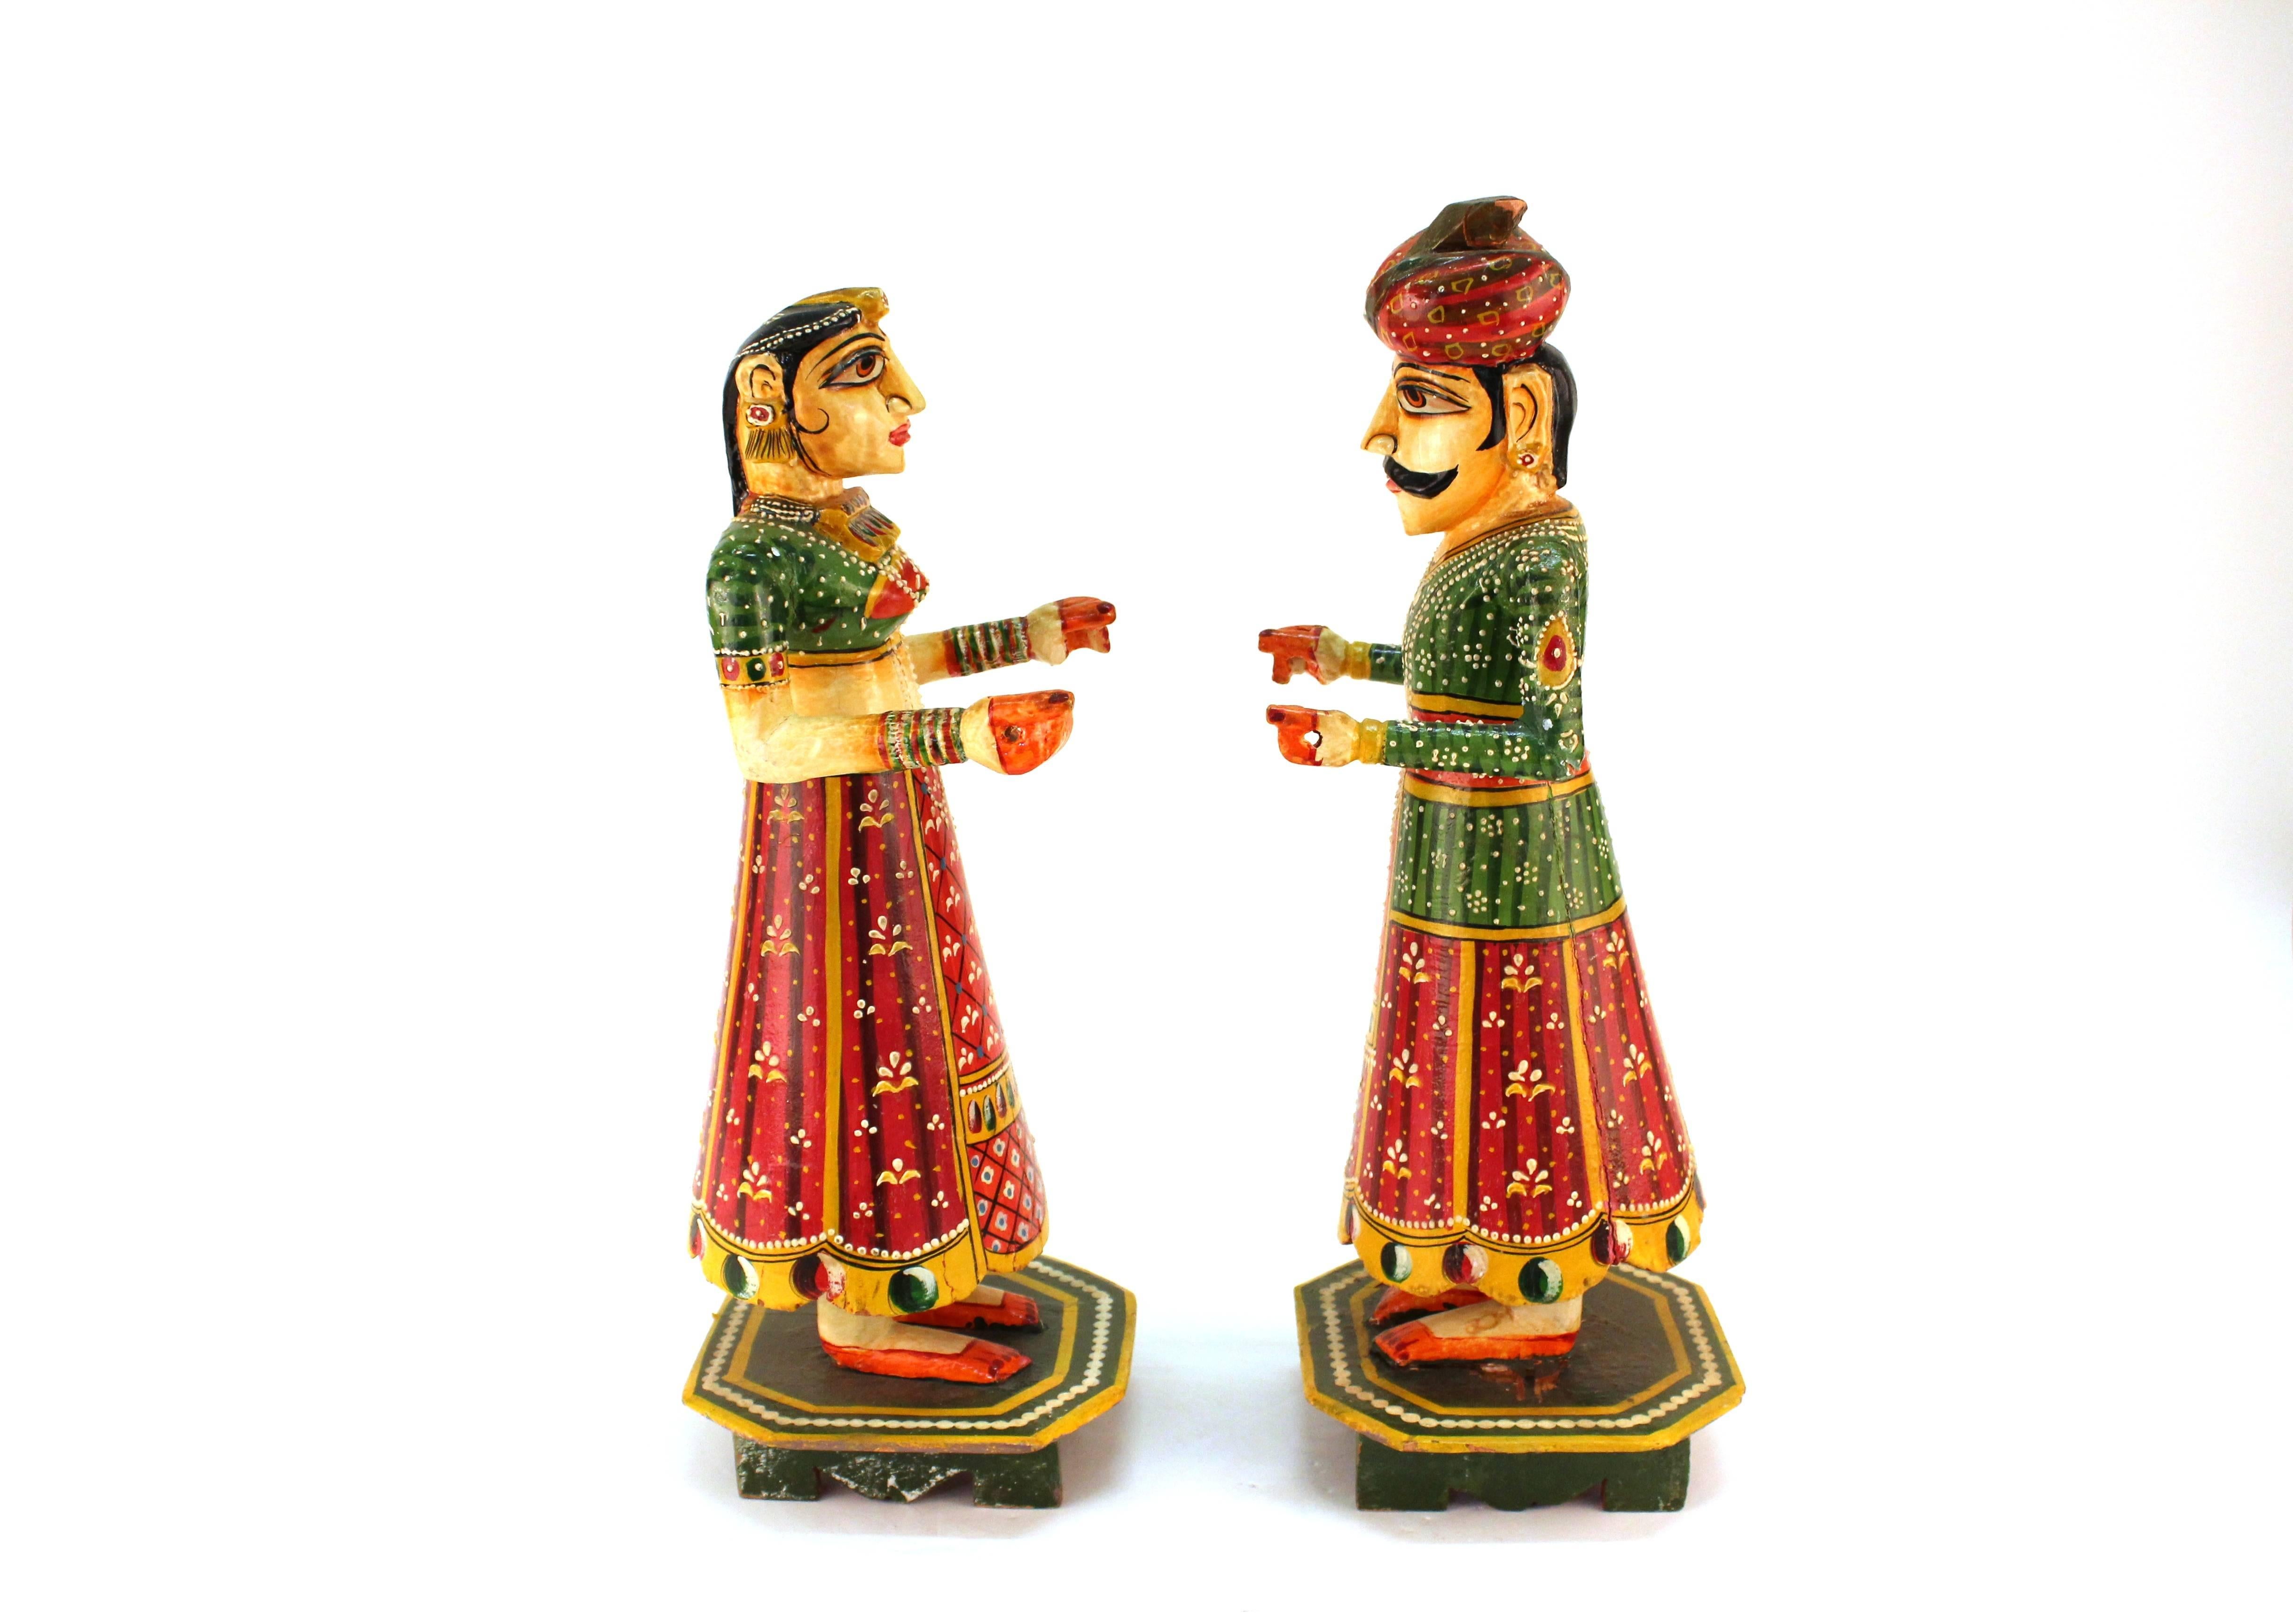 rajasthani wooden dolls